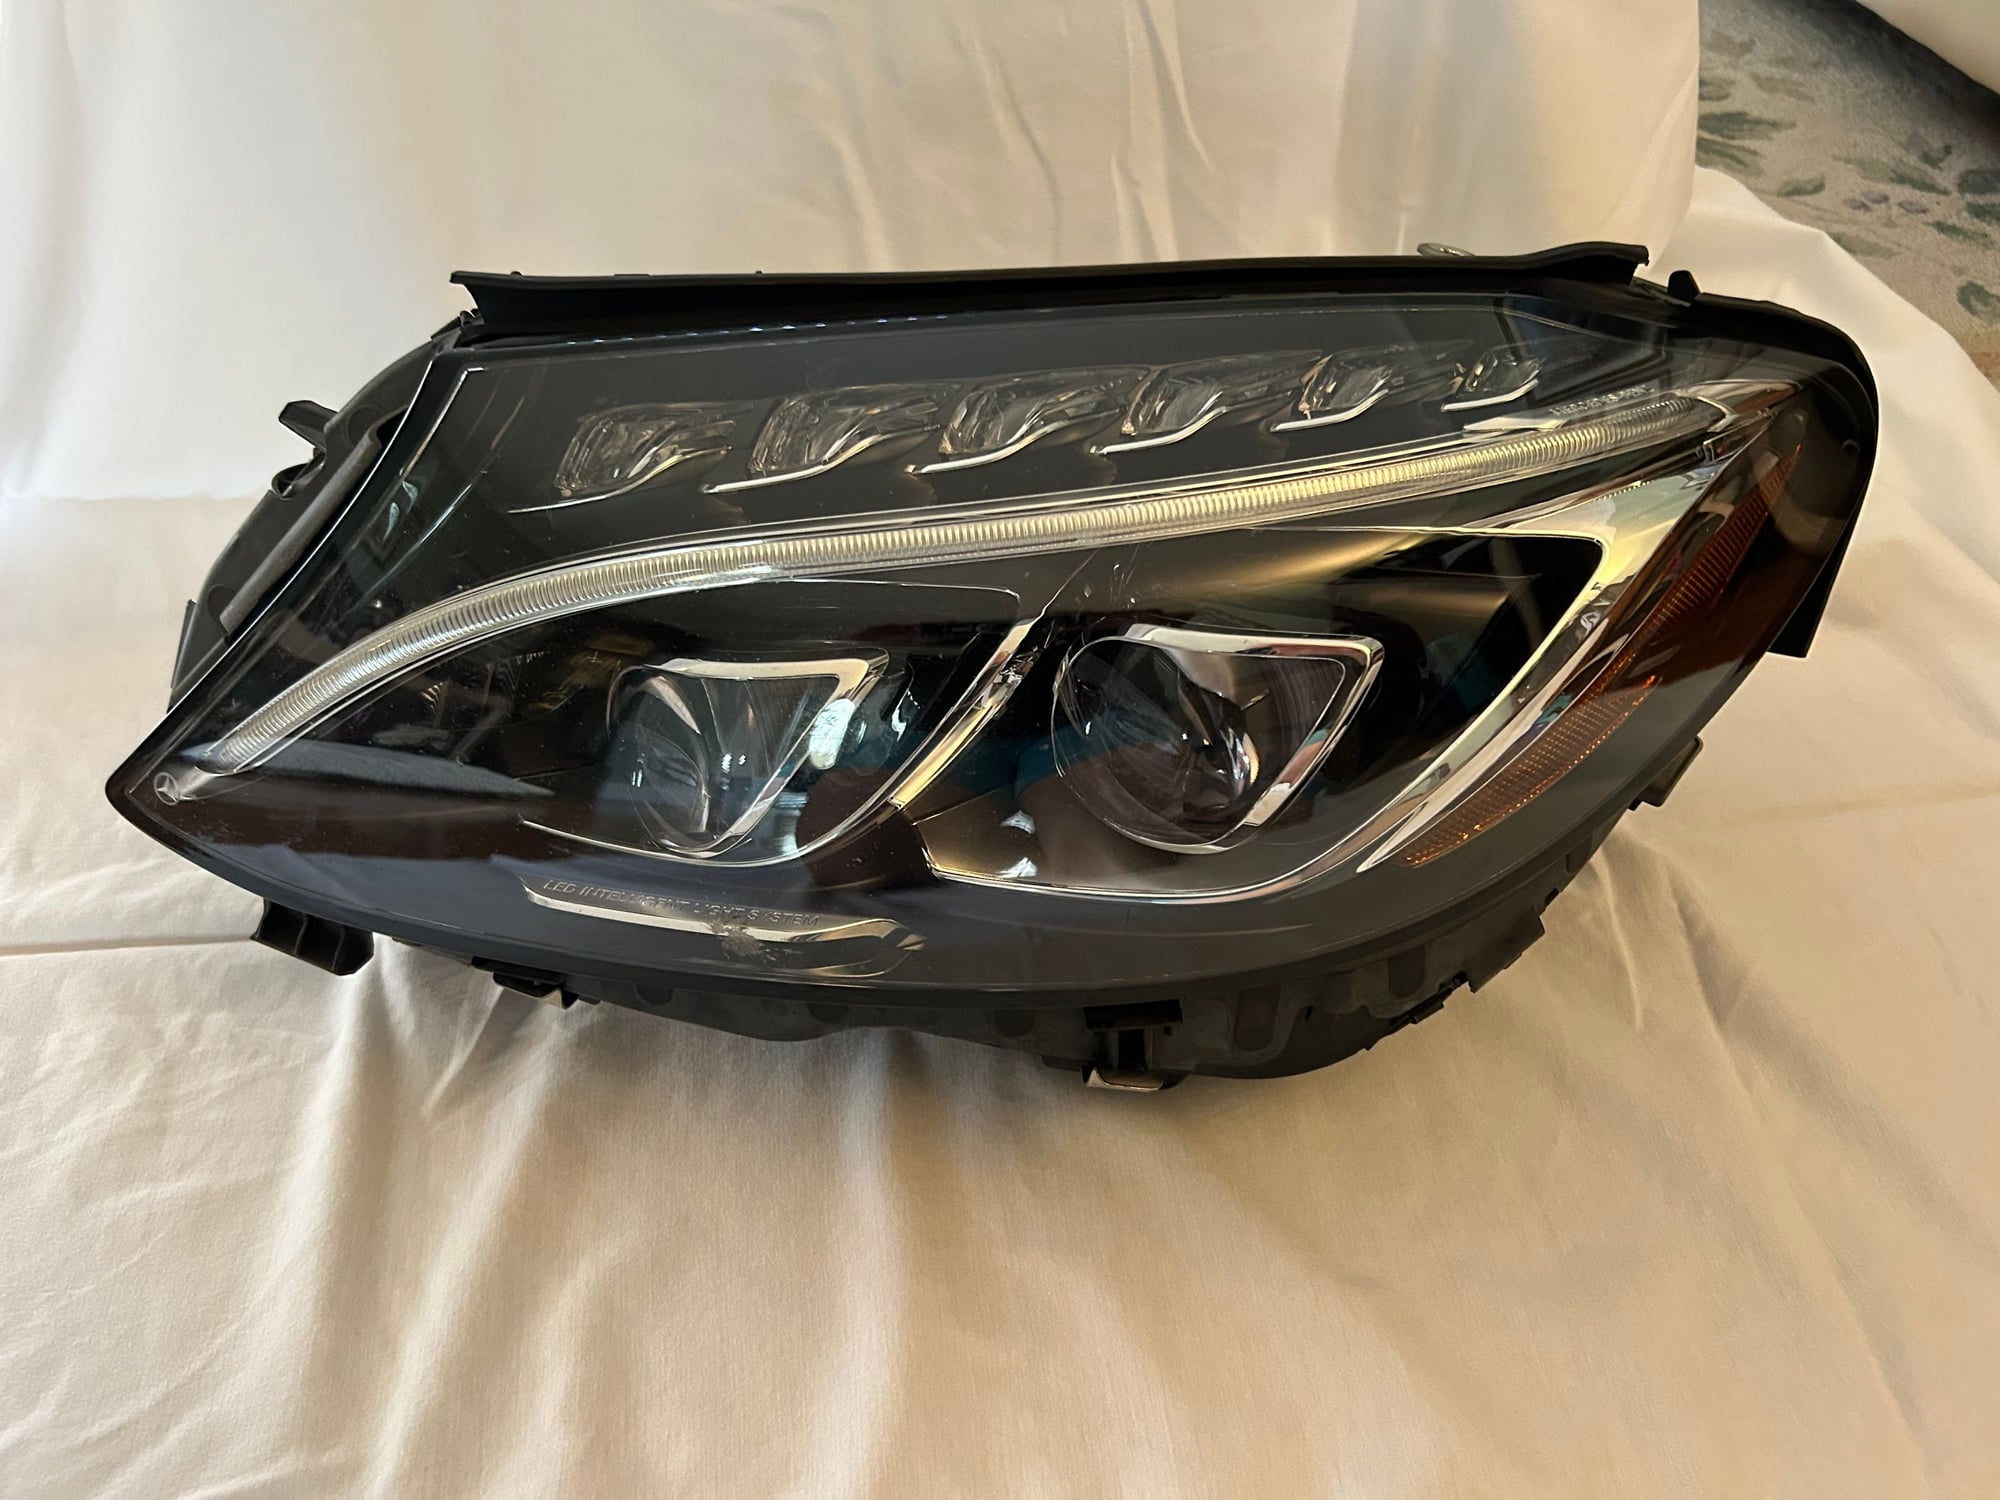 Lights - 2015-19 C63s/C43 Dynamic Headlight - Used - 2015 to 2018 Mercedes-Benz C63 AMG S - Canton, MI 48187, United States